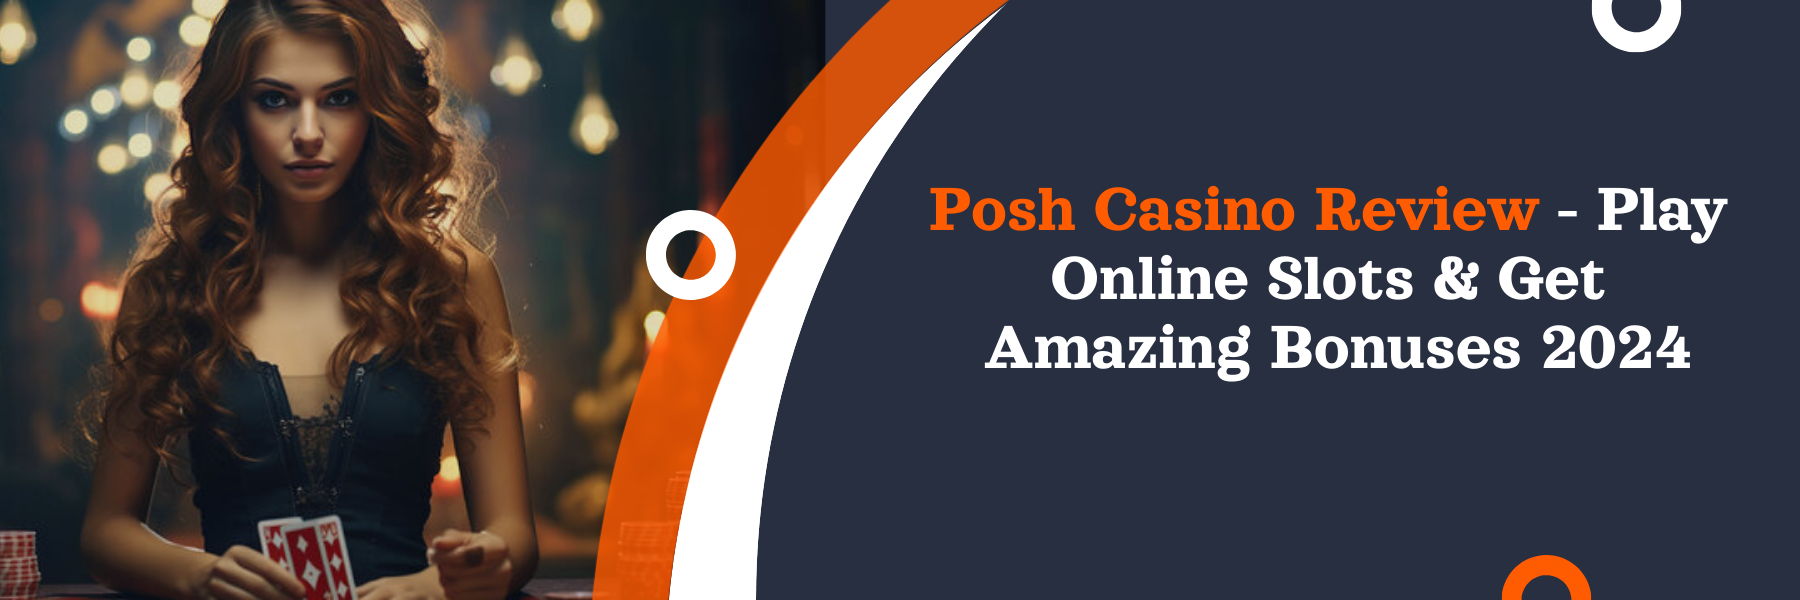 Posh Casino: Play Slots, Get Amazing Bonuses